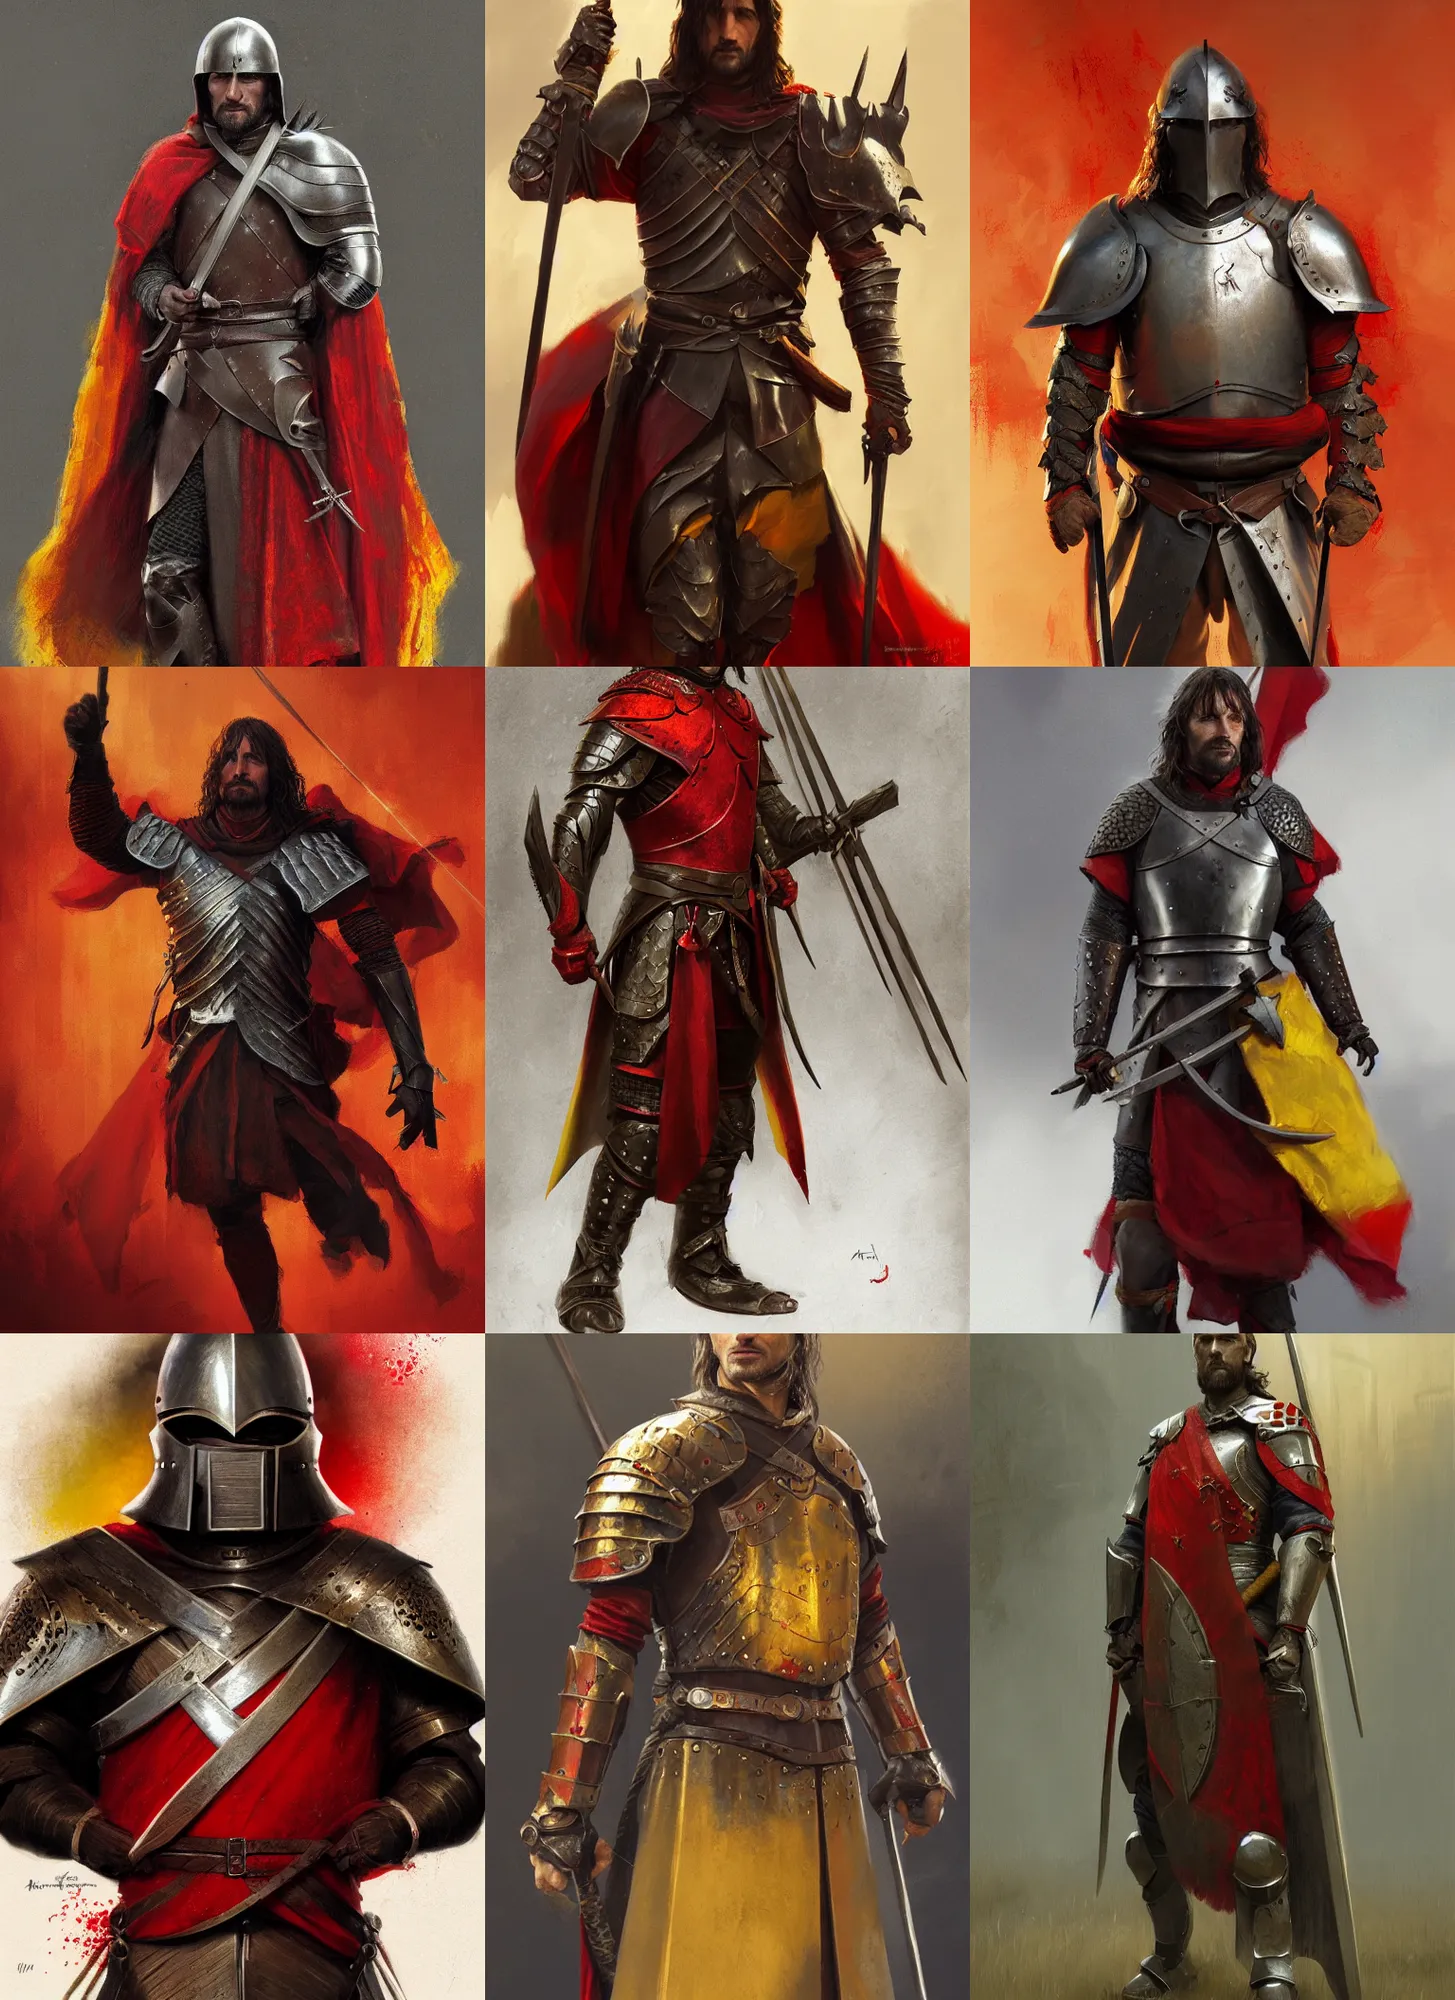 Prompt: aragorn medieval armor, dark, red yellow flag, intricate, highly detailed, smooth, artstation, digital illustration, ruan jia, mandy jurgens, rutkowski